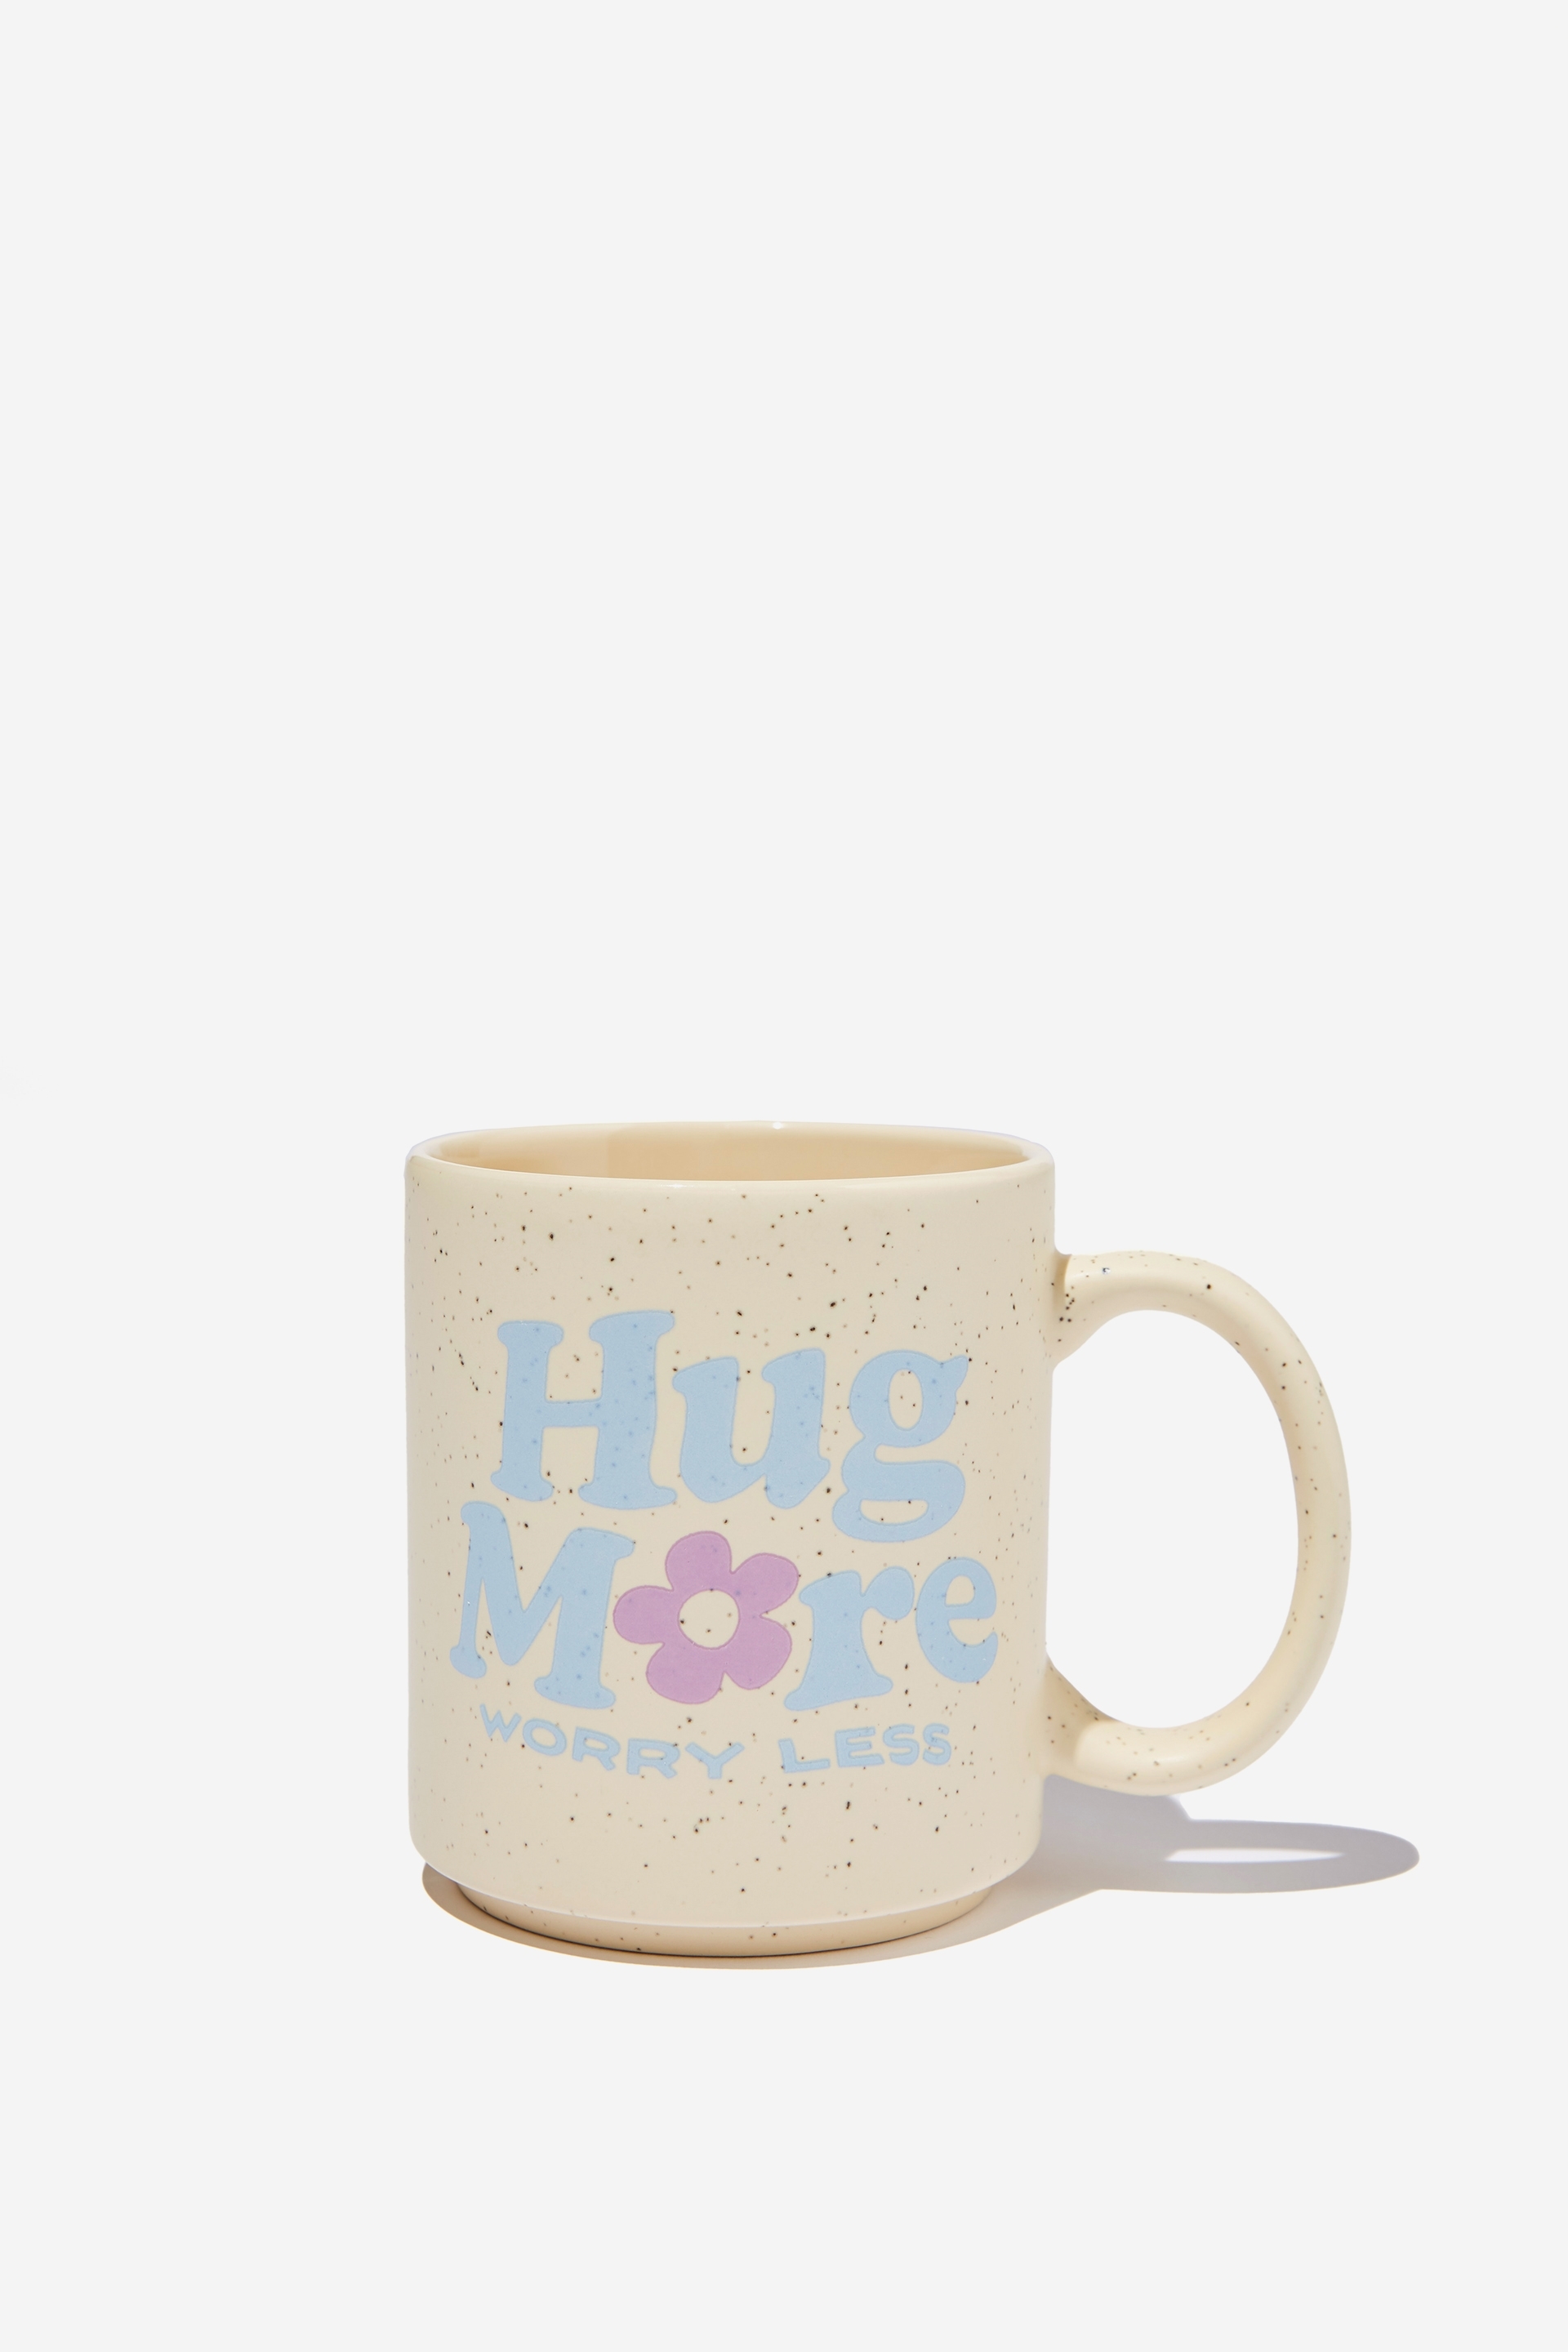 Typo - Daily Mug - Hug more worry less